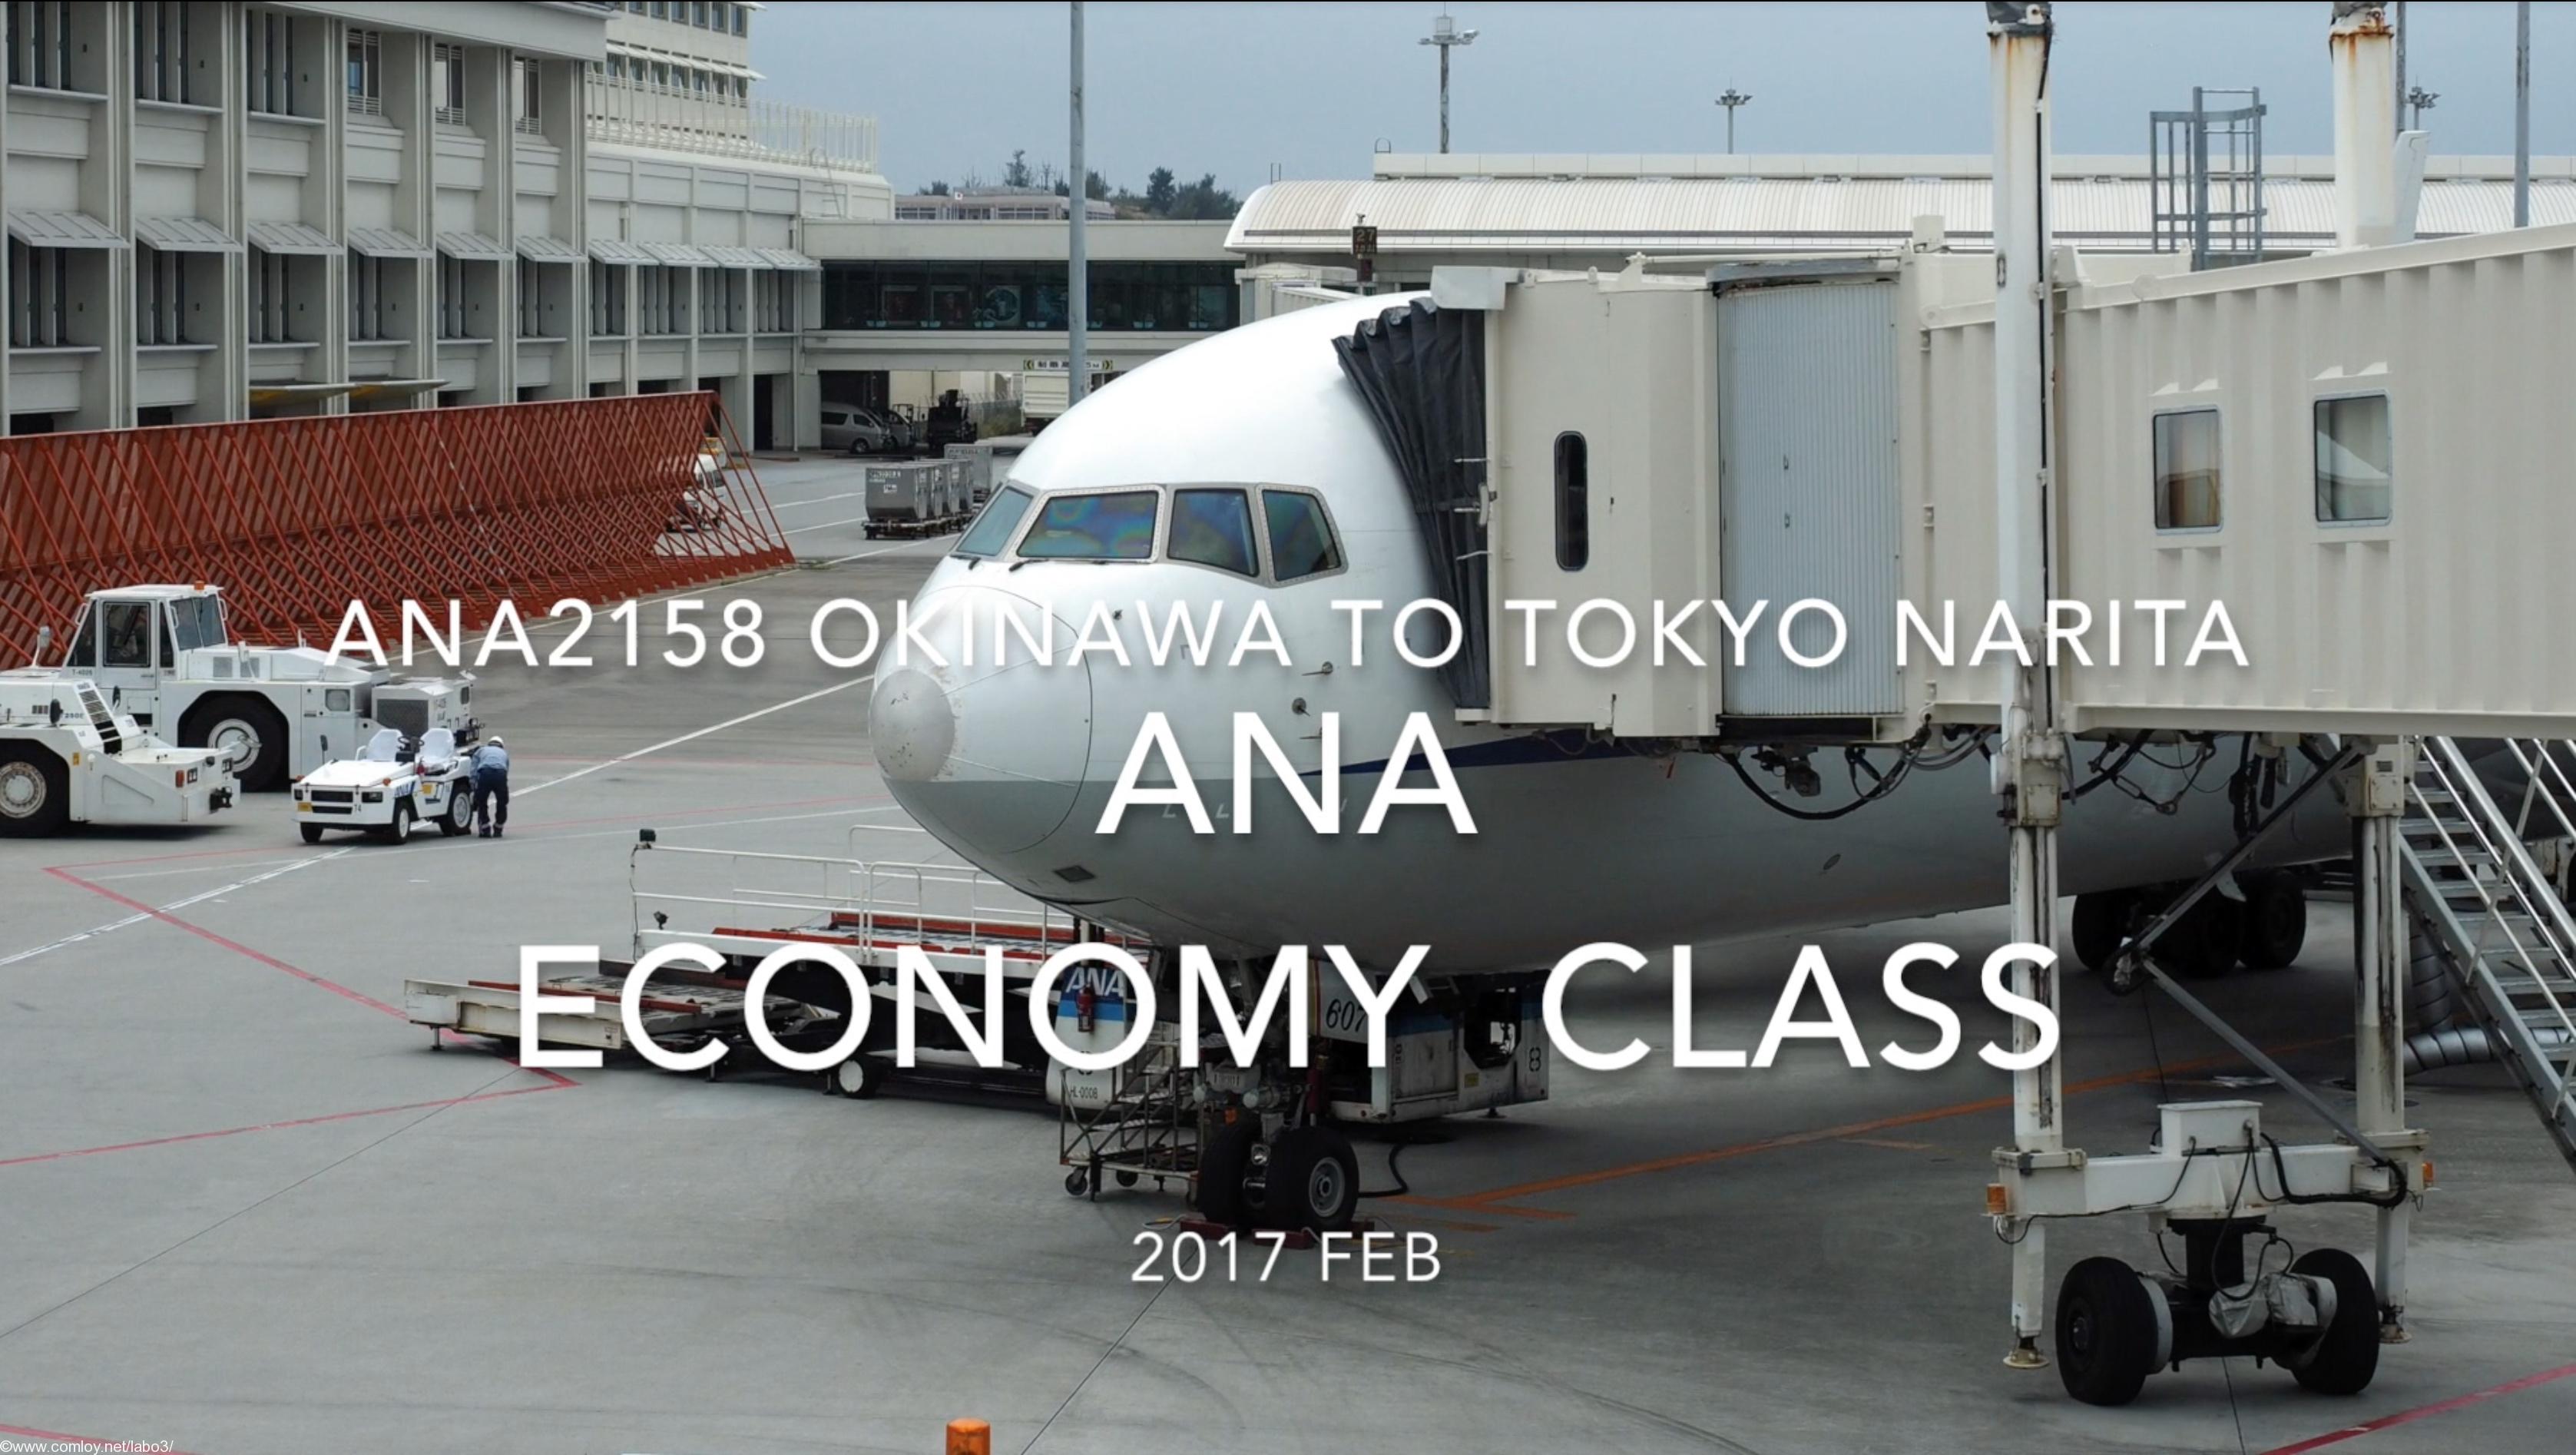 【Flight Report】ANA Economy Class ANA2158 OKINAWA NAHA to TOKYO NARITA 2017・02 全日空エコノミークラス搭乗記